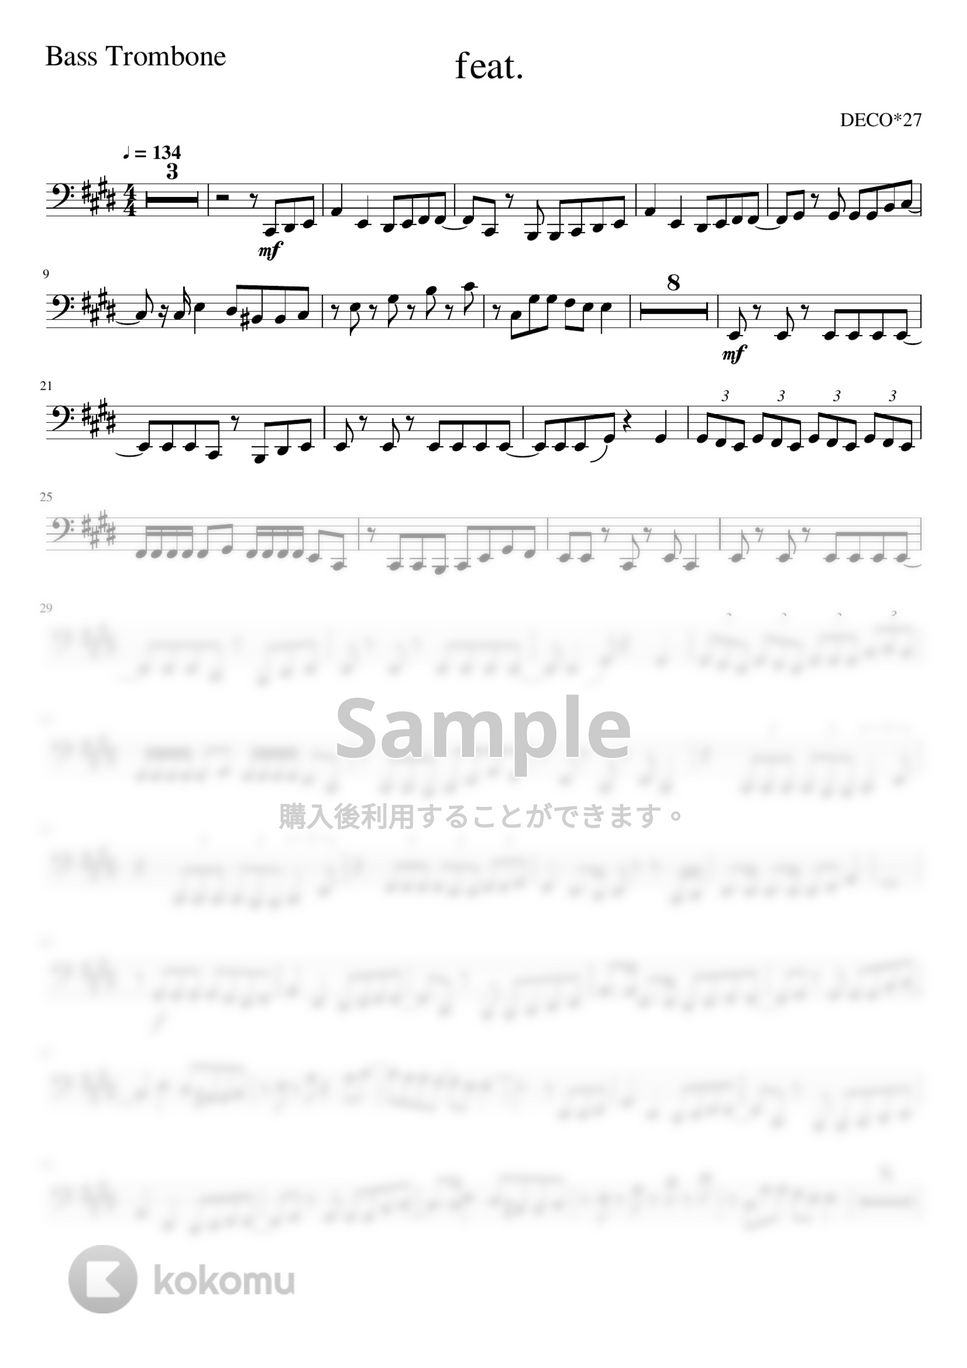 DECO*27 - 乙女解剖 (-Bass Trombone Solo- 原キー) by Creampuff